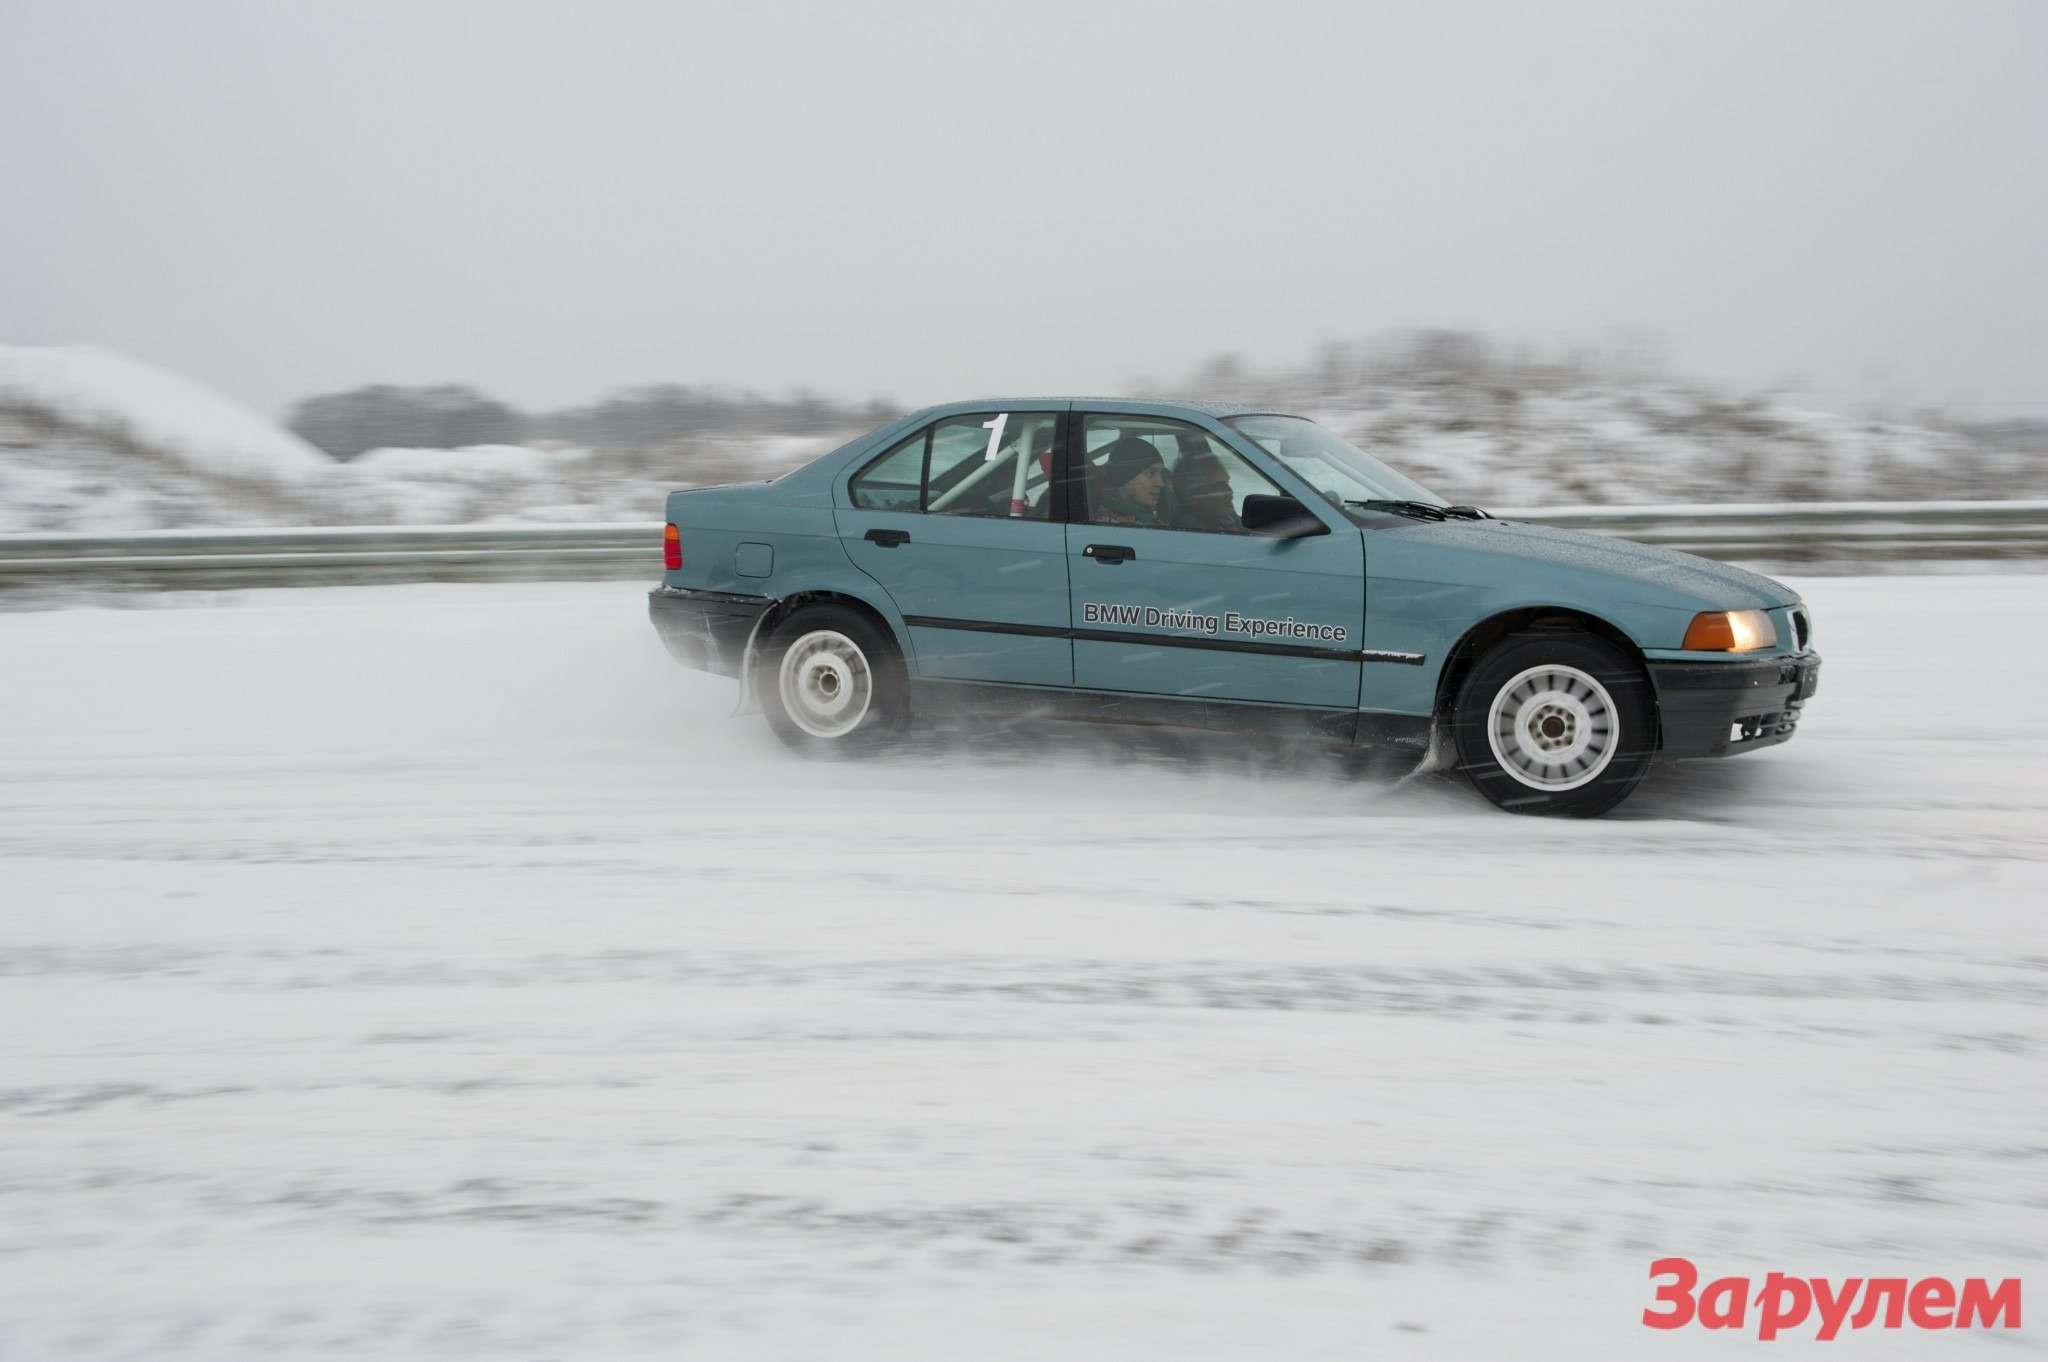 BMW xDrive to Rally (74)